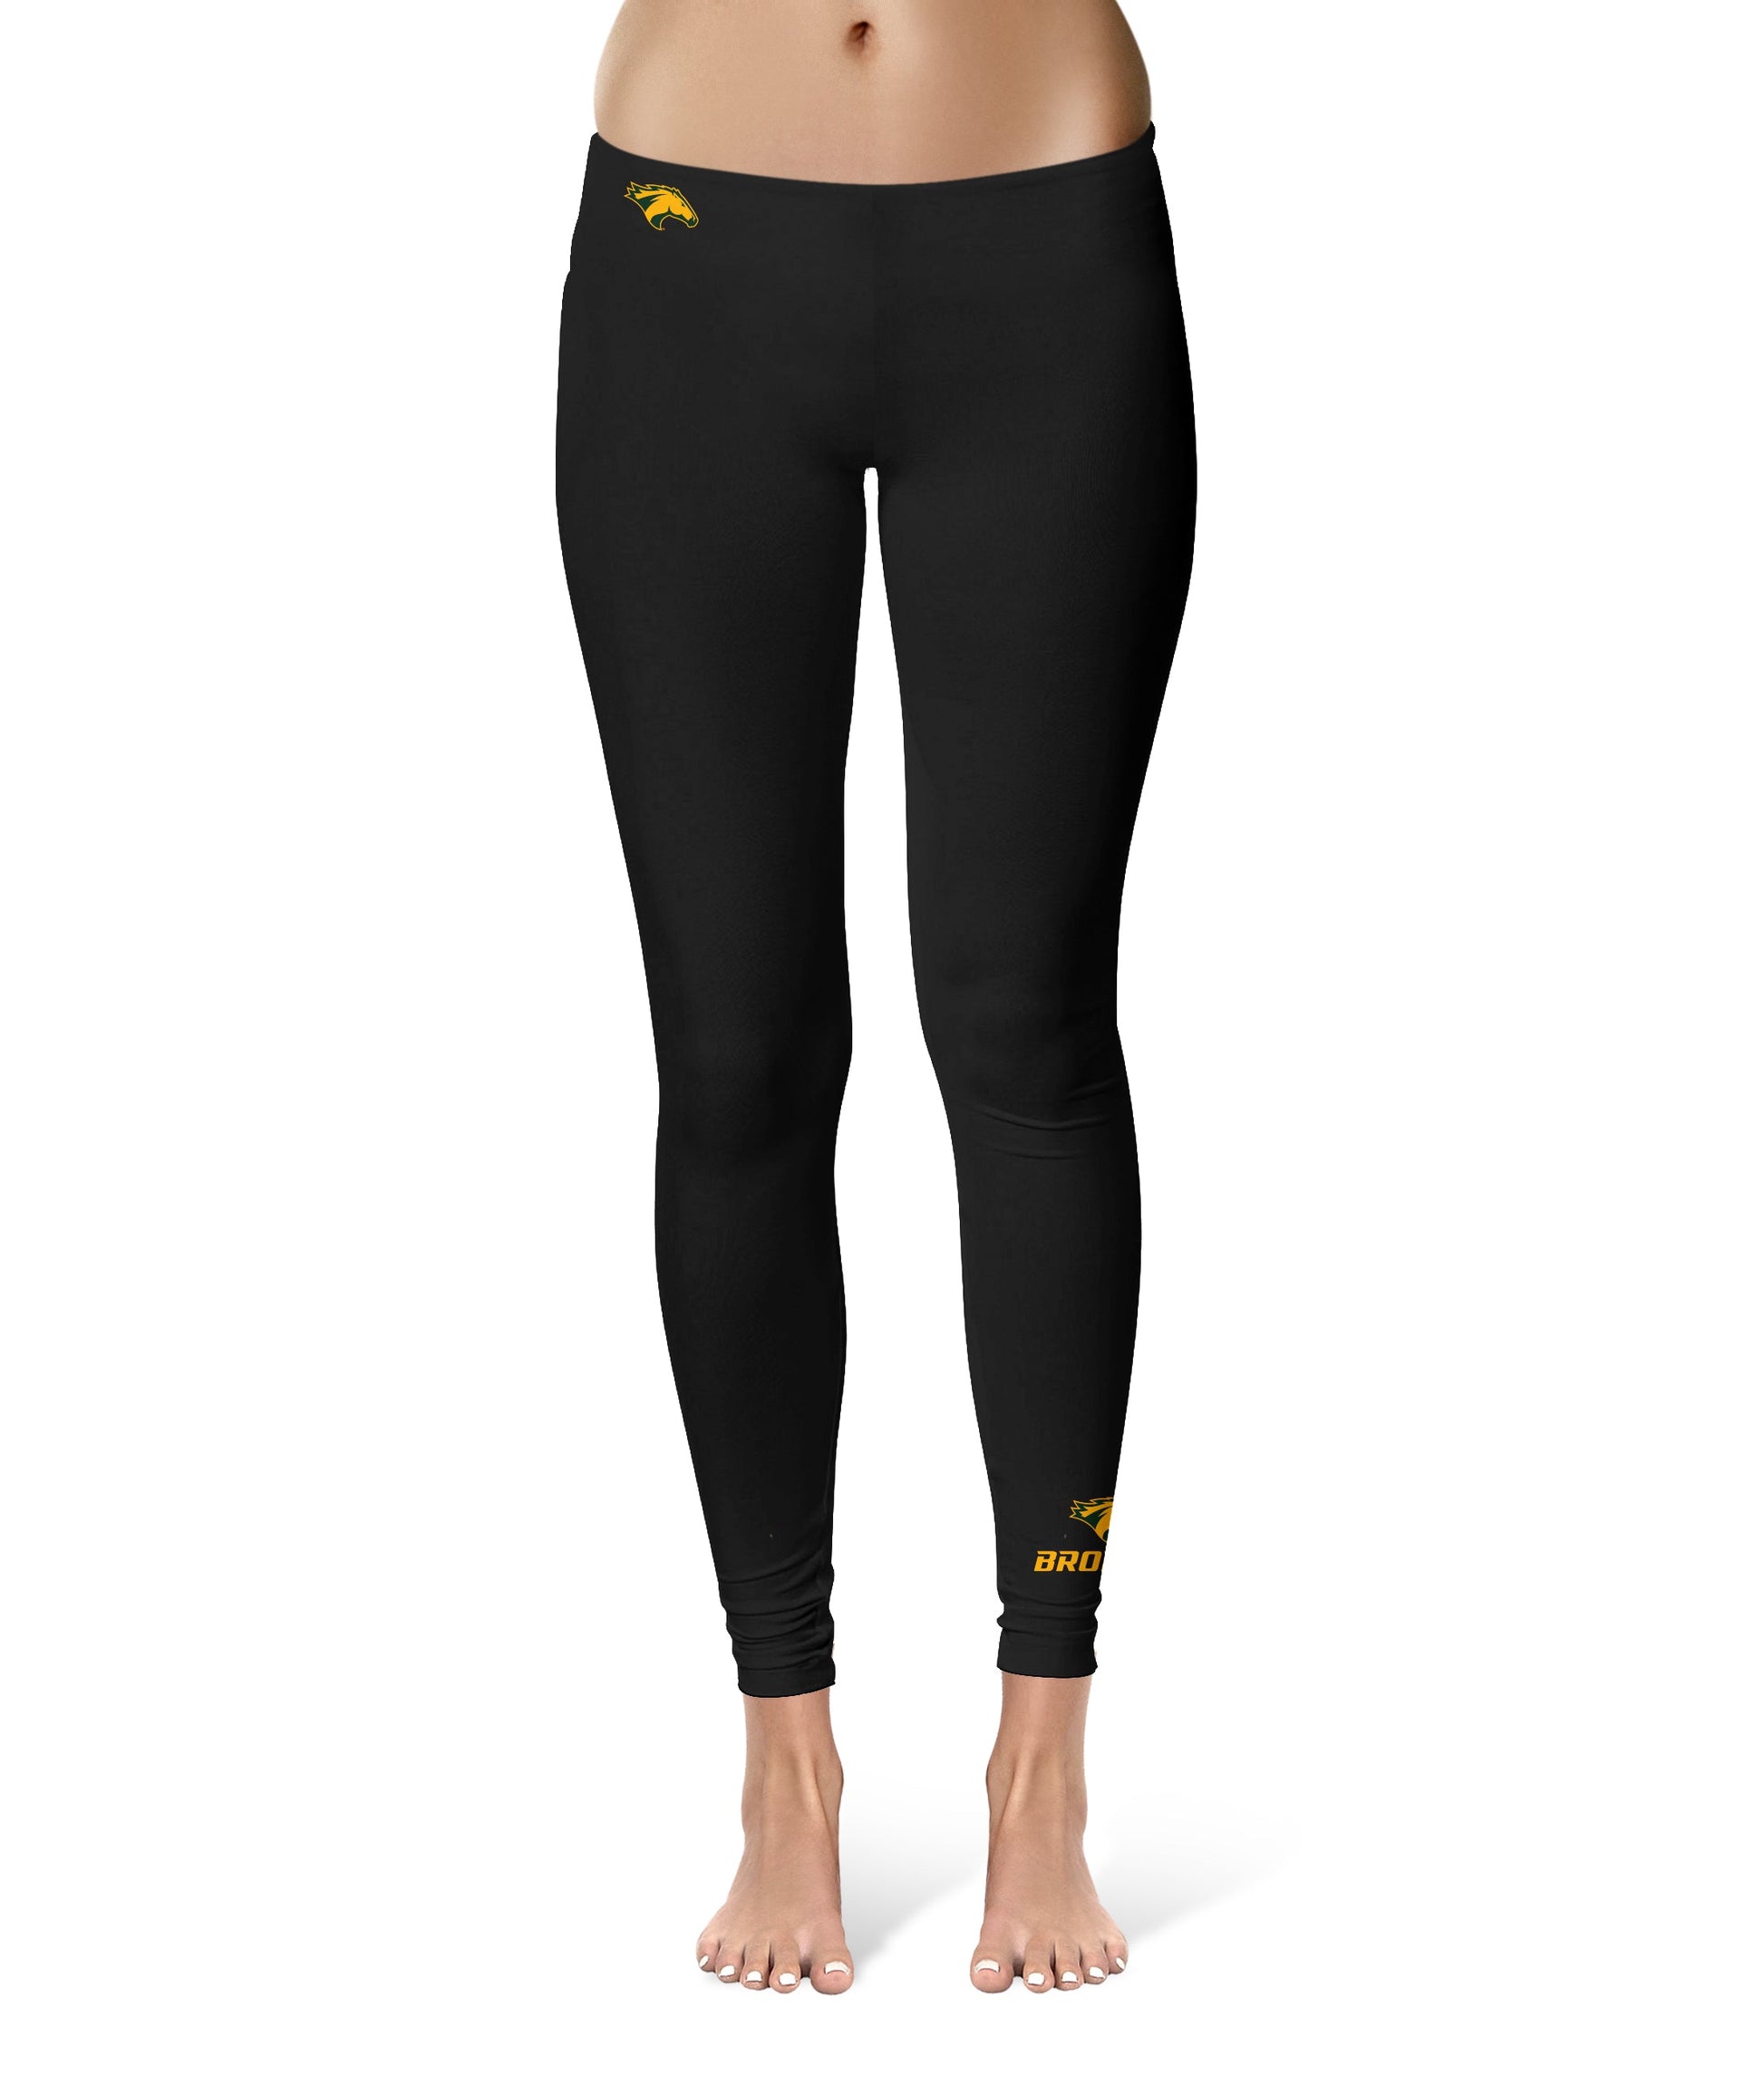 Symbol Yoga Pants Brand Logos For Women